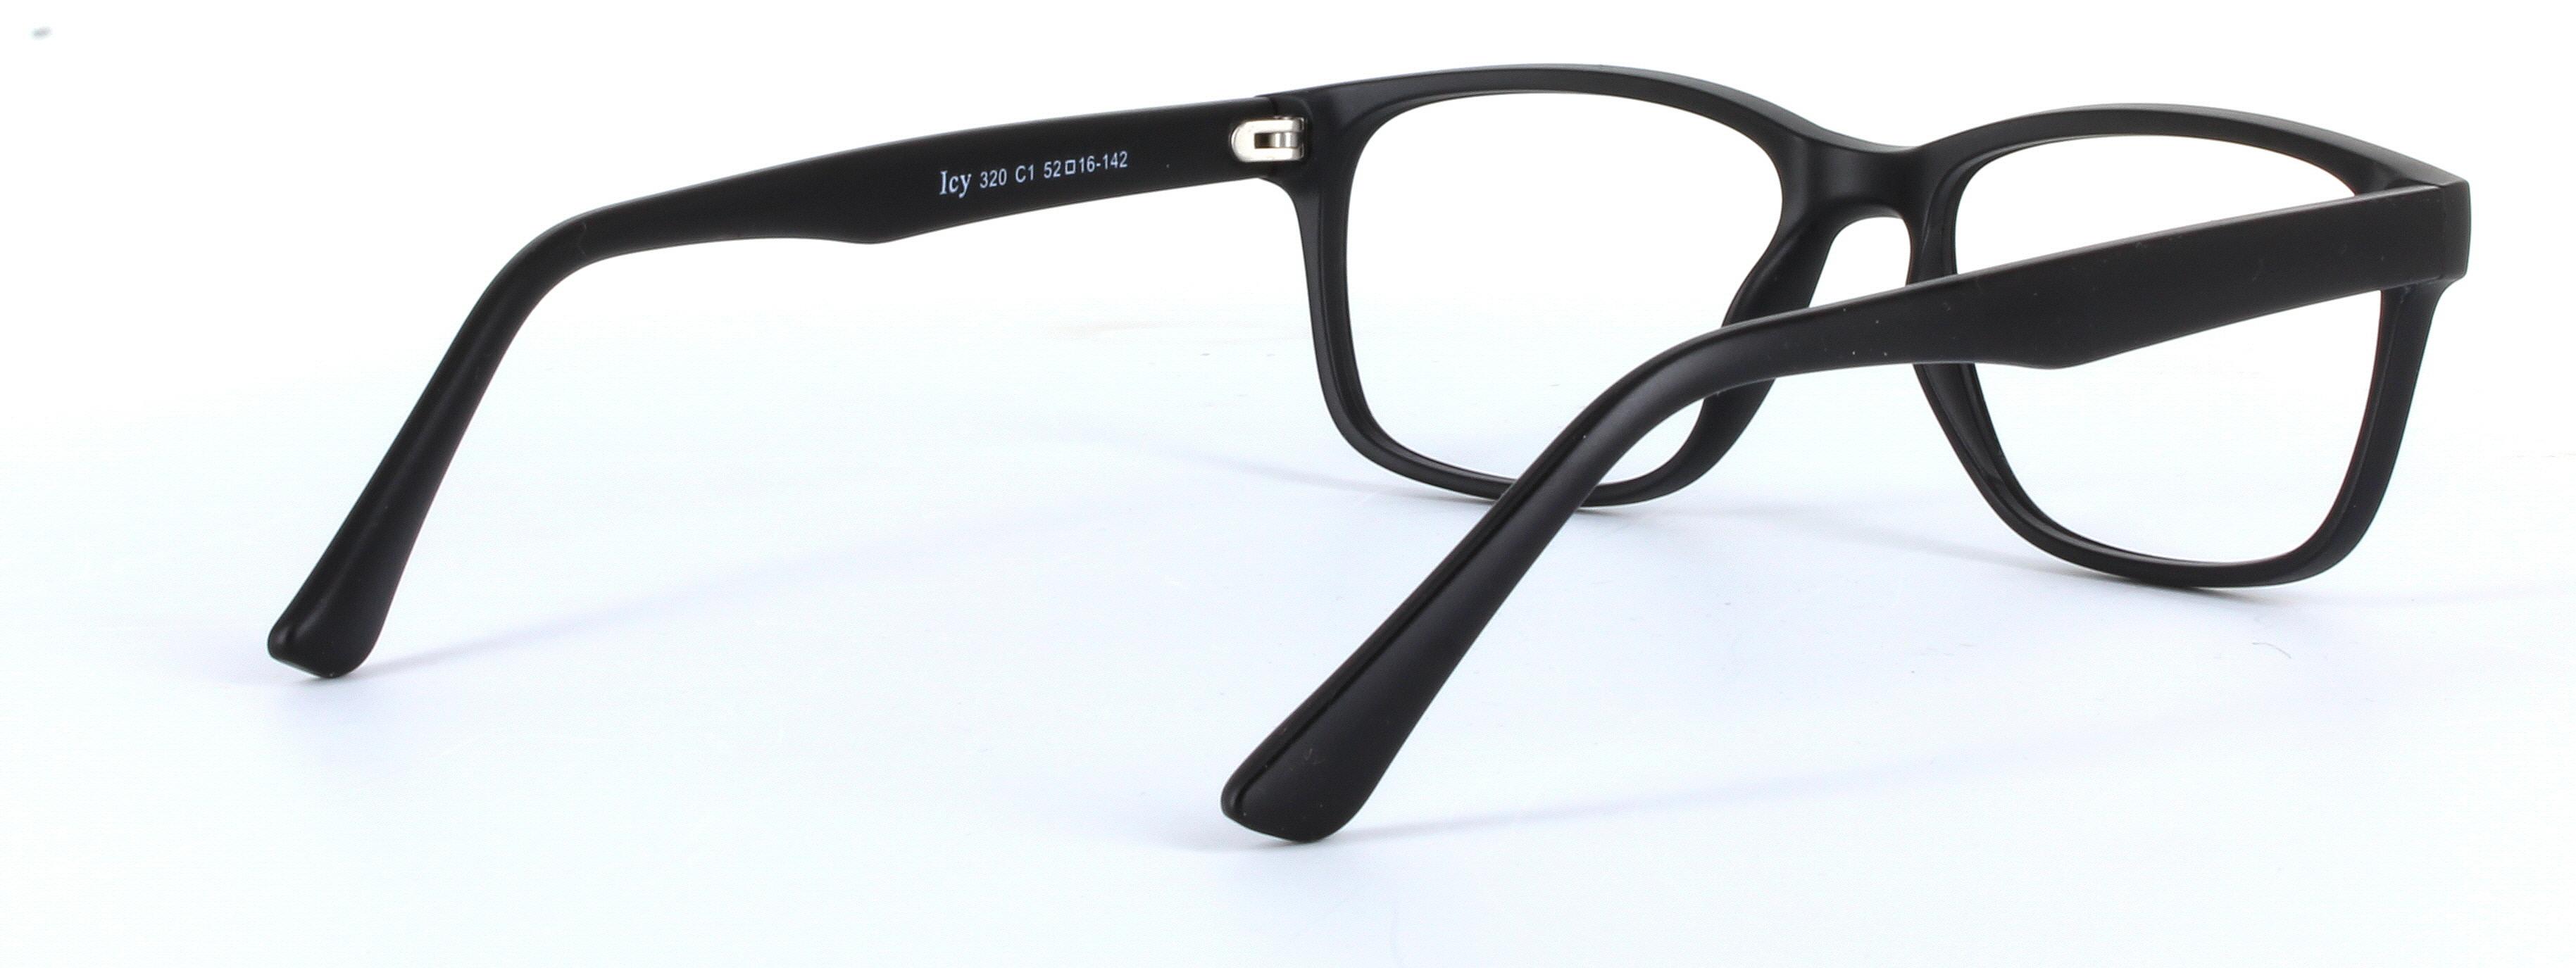 Chelsea Black Oval Square Plastic Glasses - Image View 4